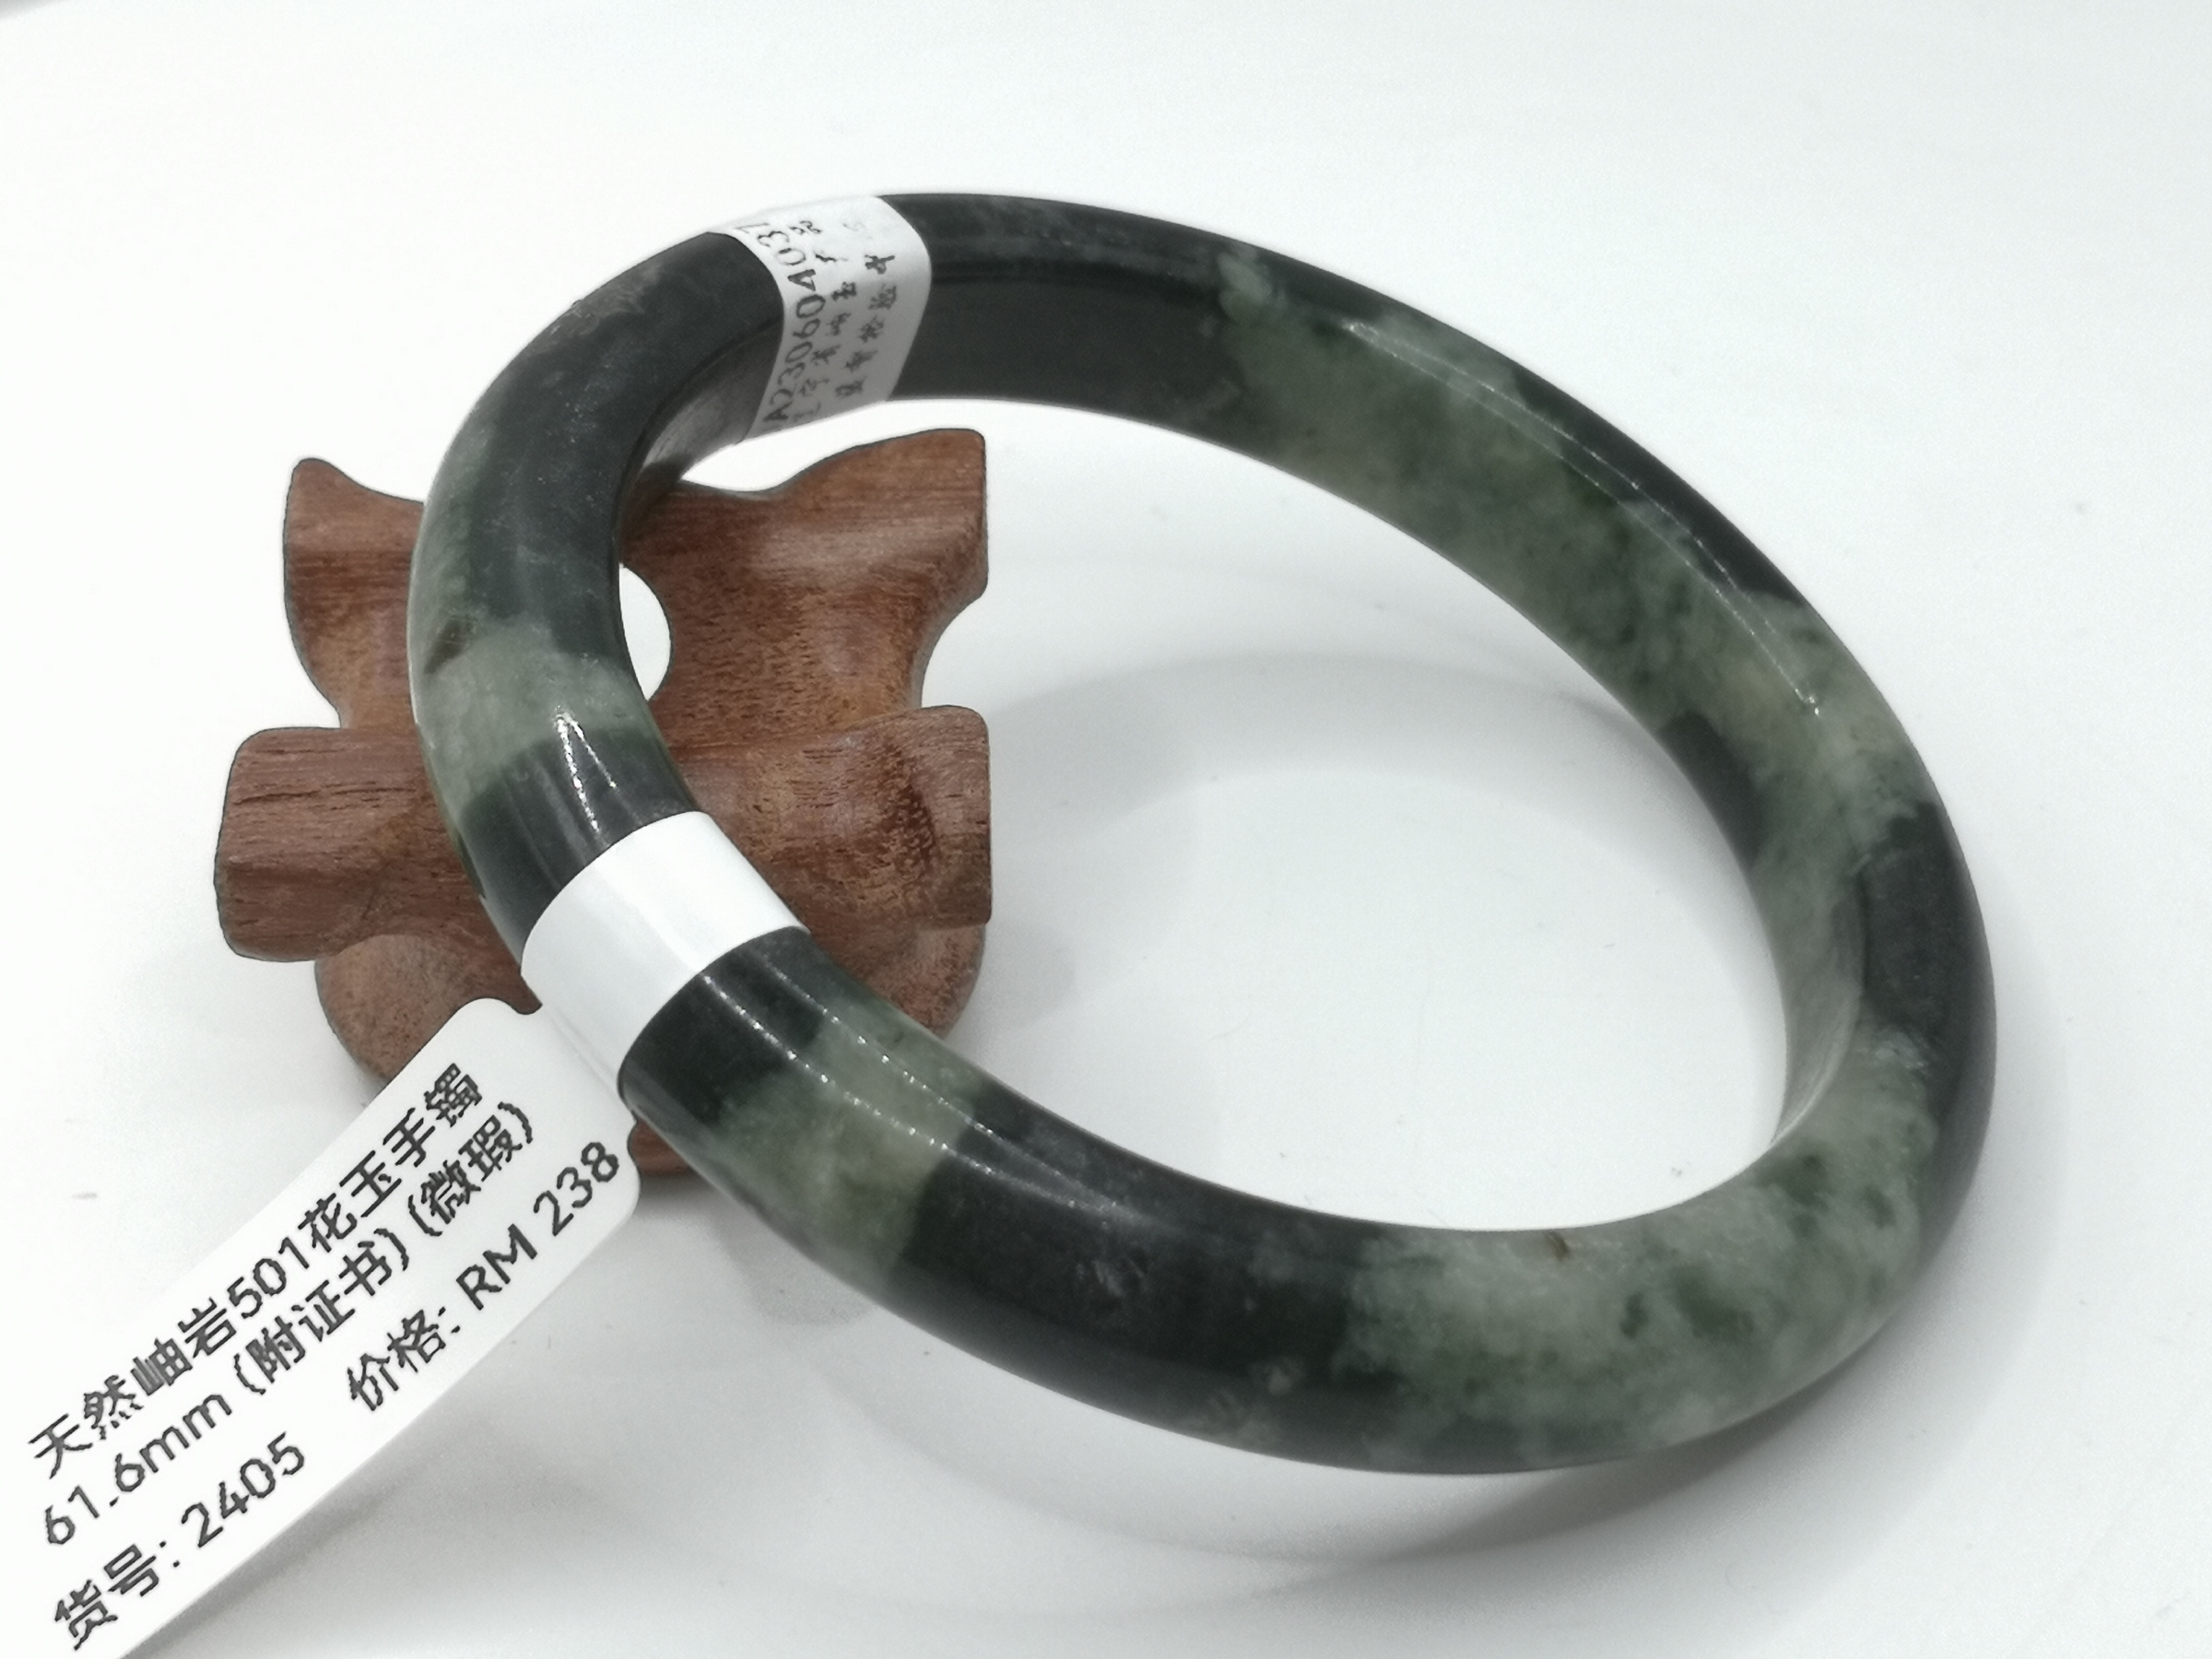 🍀 B2405 - Natural Serpentine Jade Bangle 61.6mm (with certificate) (Slightly flawed) 天然岫岩501花玉手镯 61.6mm (附证书) (微瑕)